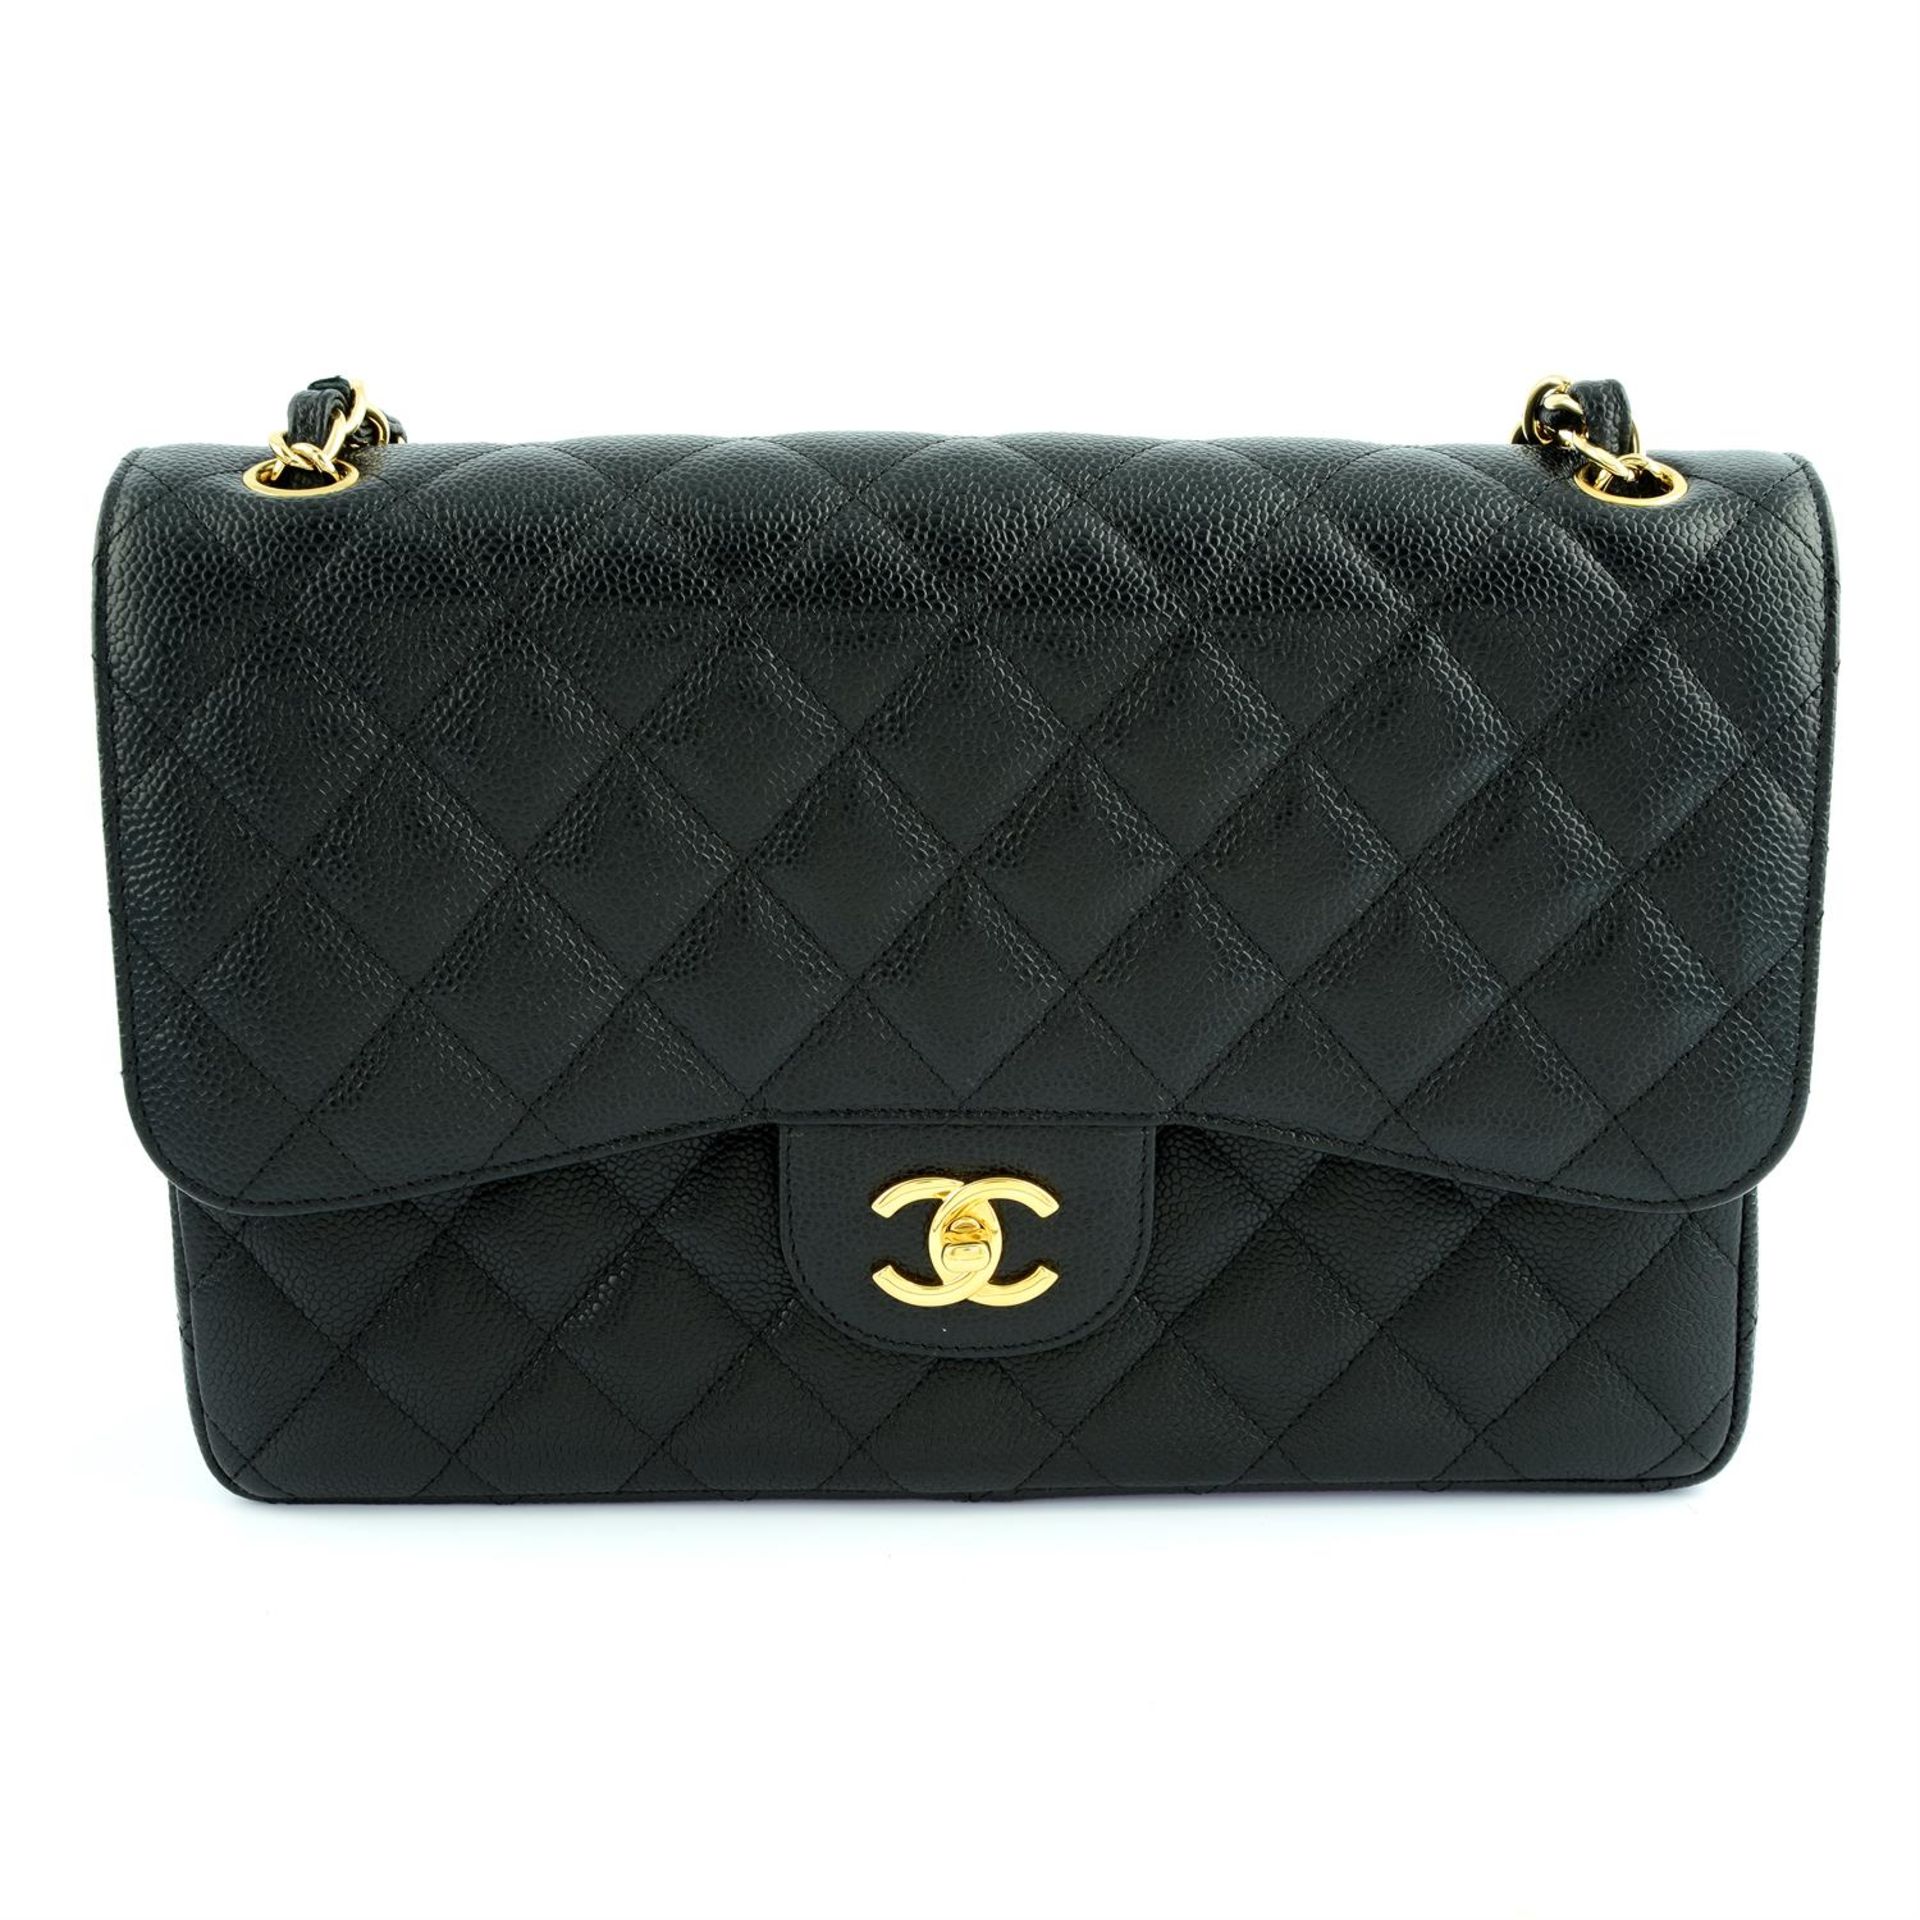 CHANEL - a black Caviar leather Jumbo Classic double flap handbag.